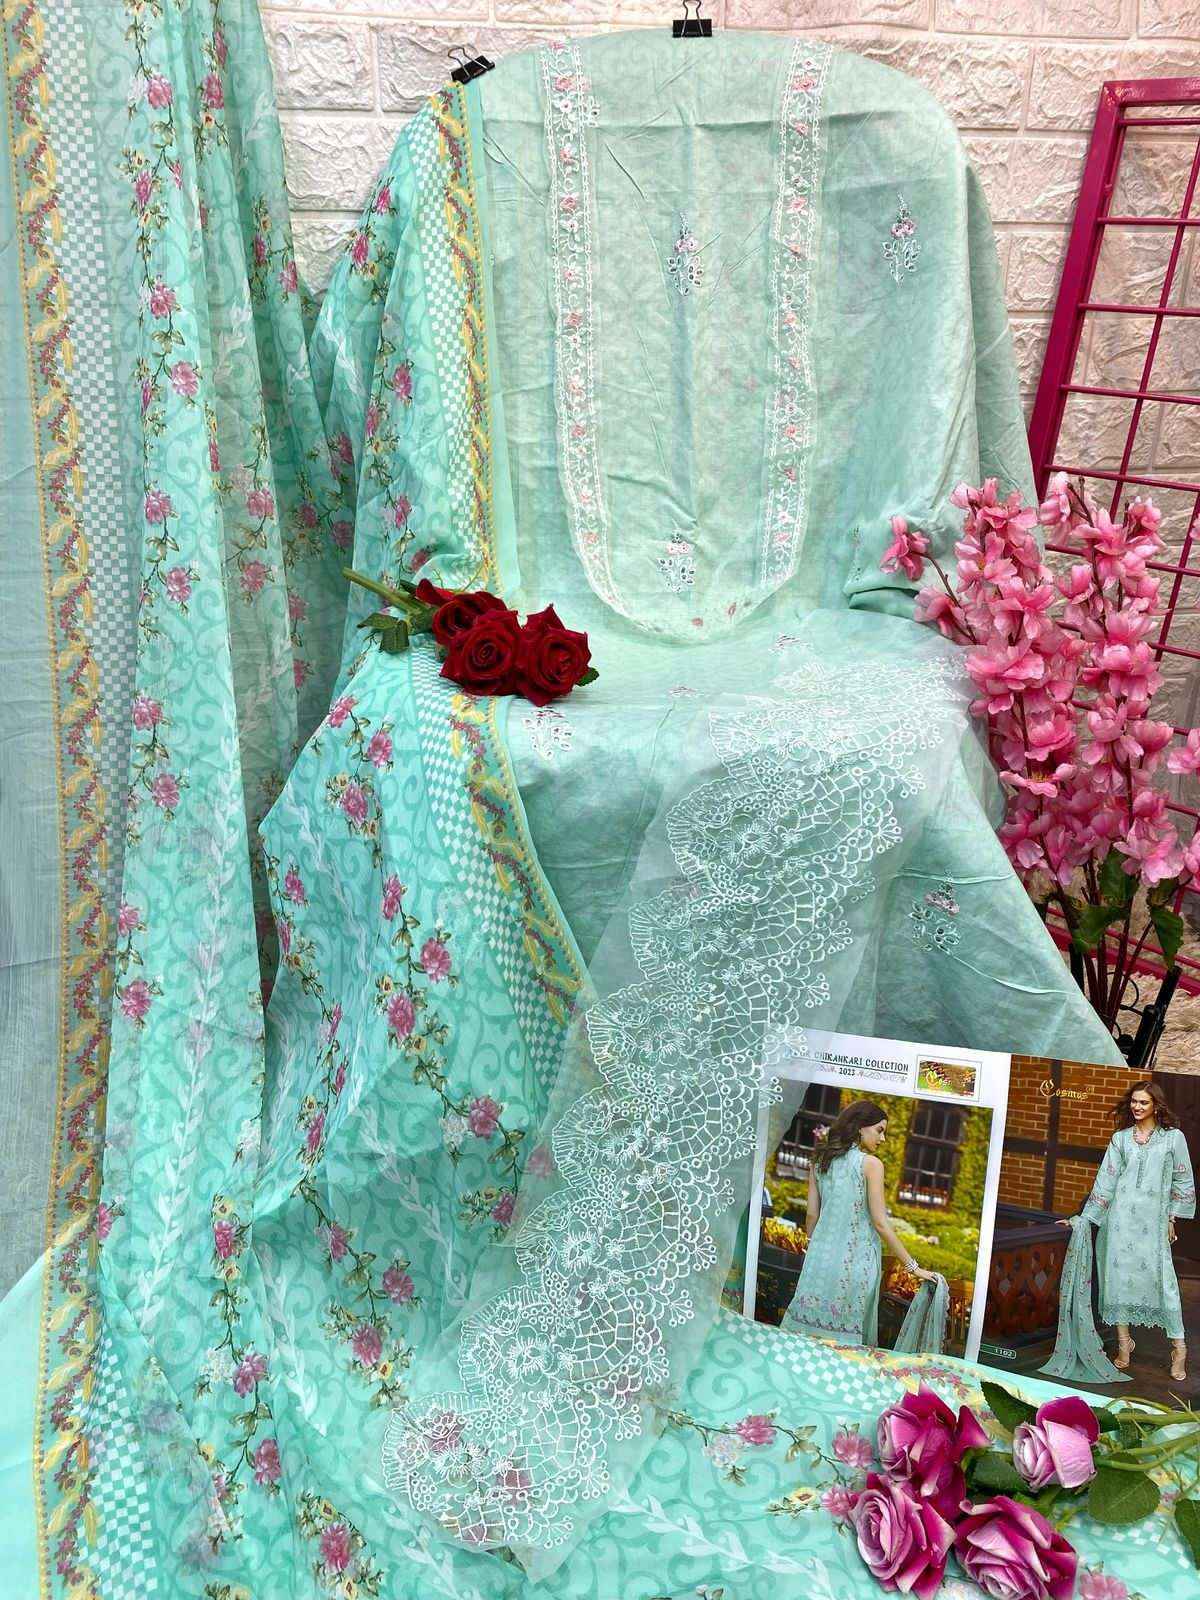 Cosmos Noor Chikankari Collection 2023 Lawn Cotton Dress Material 6 pcs Catalogue